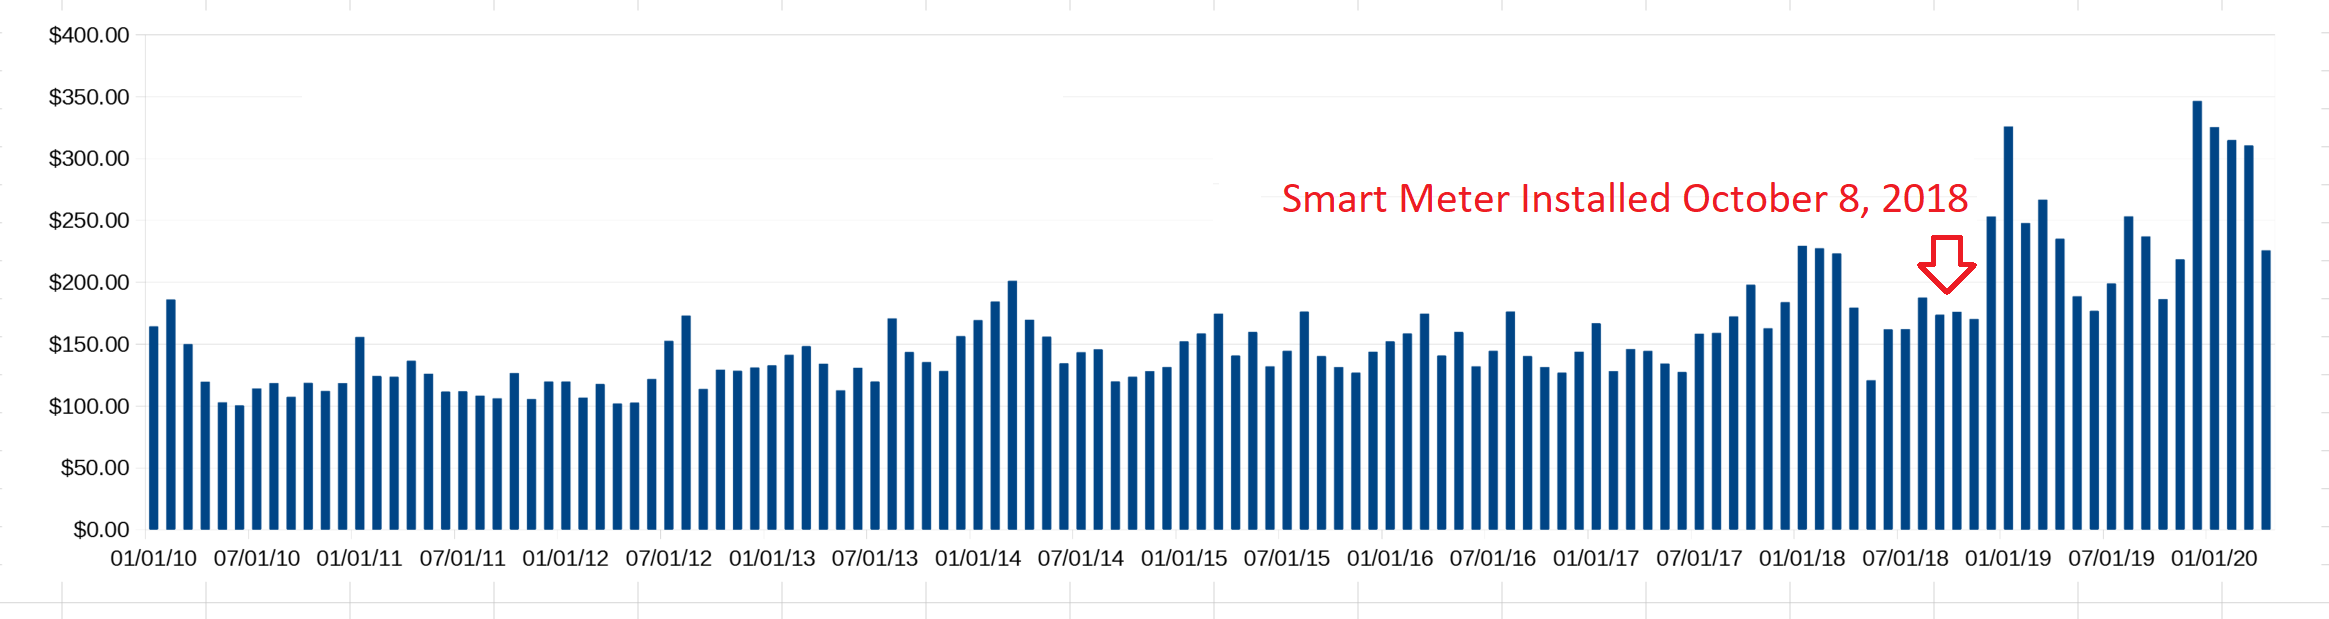 PPL History Smart Meter Graph